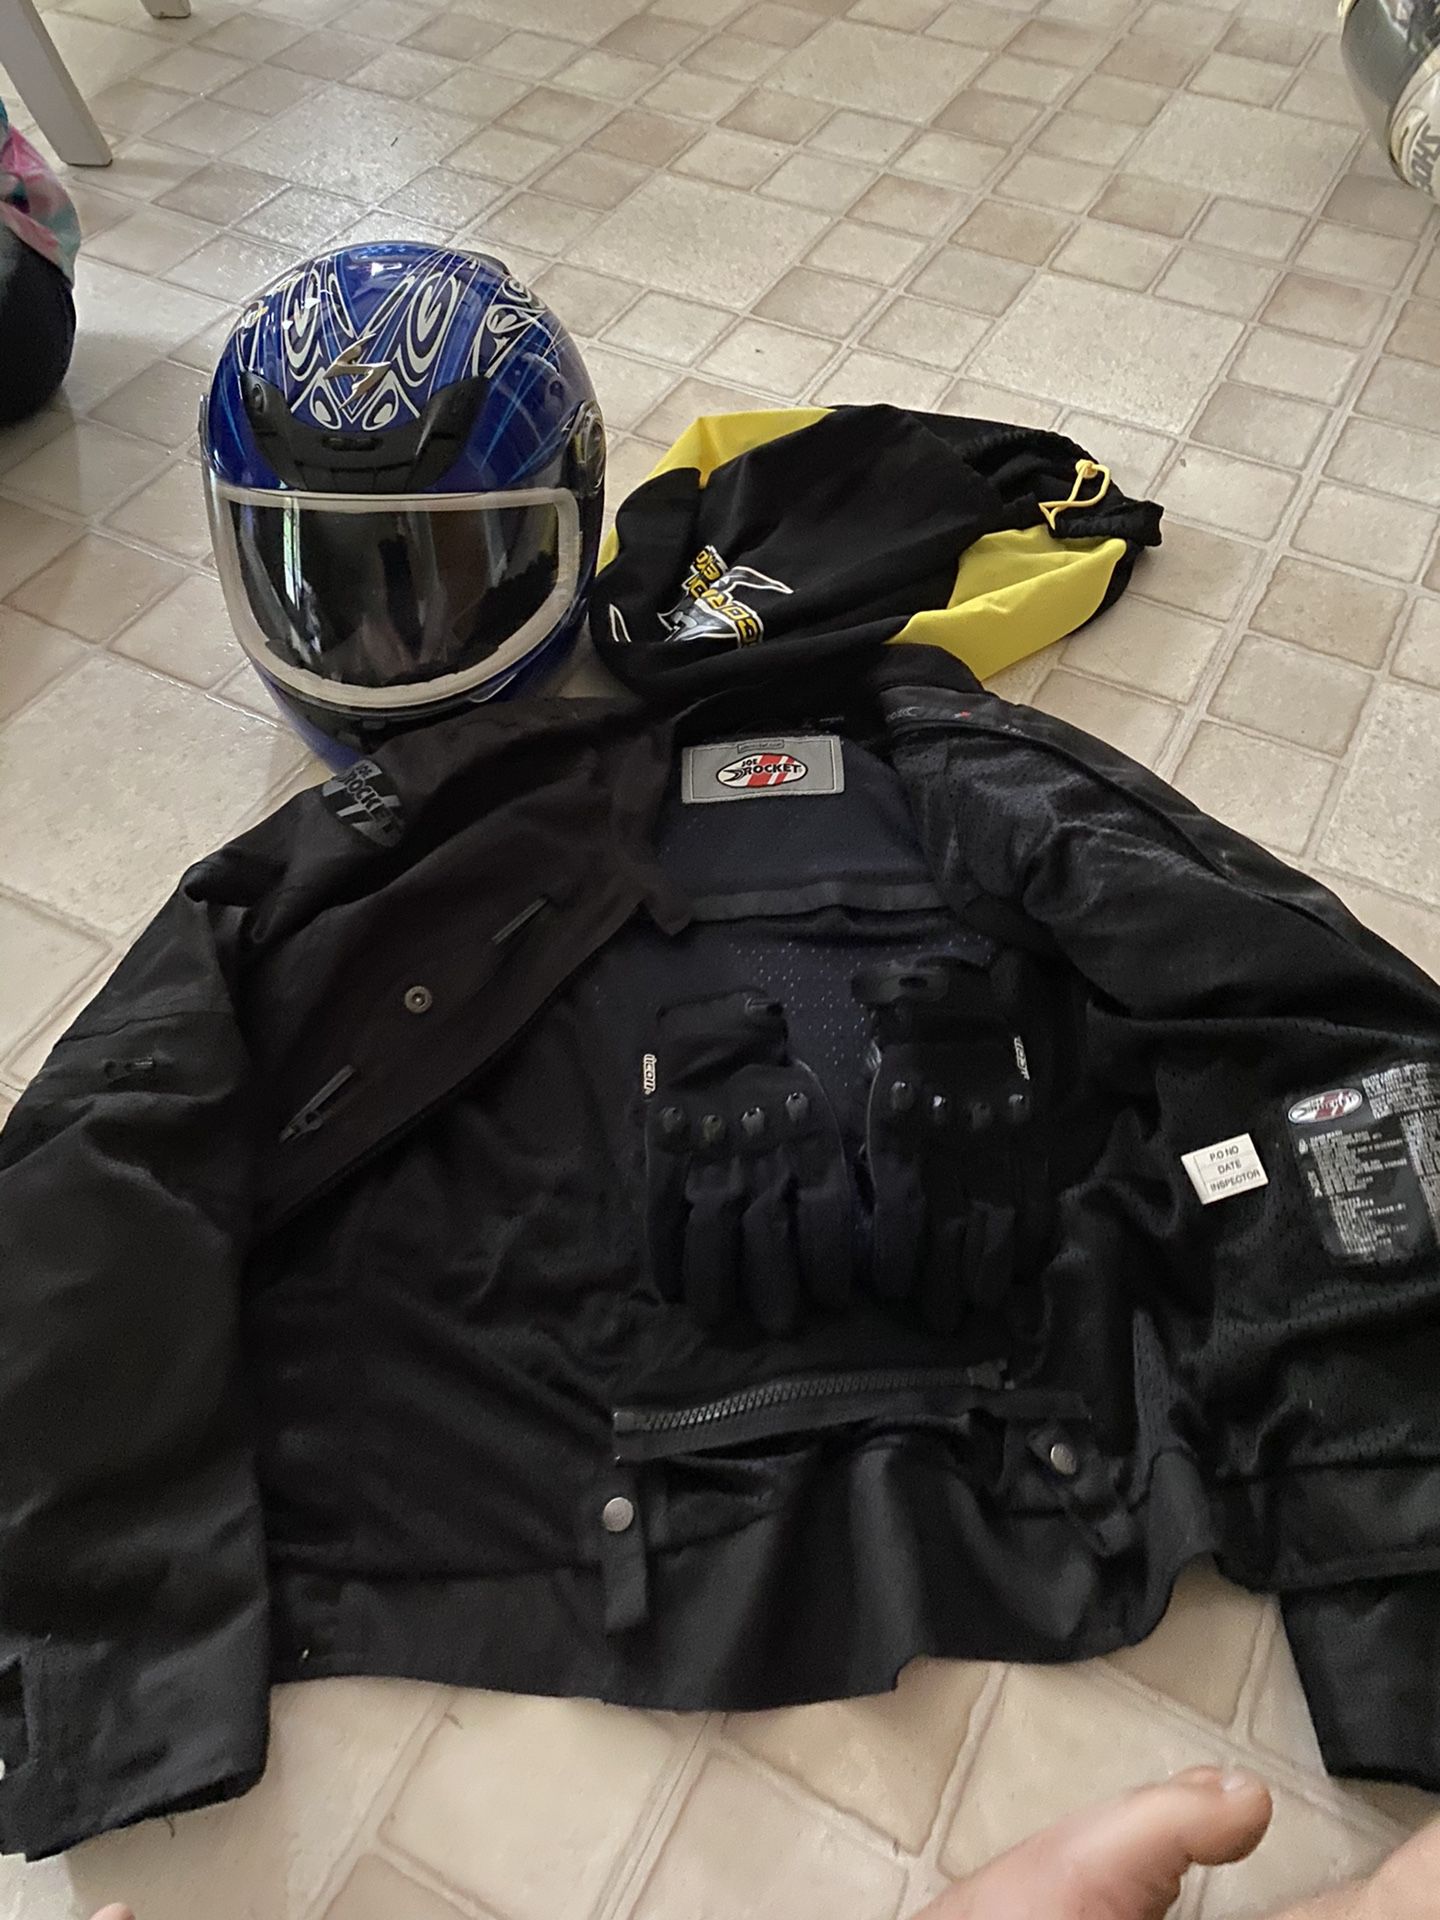 Women’s motorcycle helmet gloves and jacket asking 100